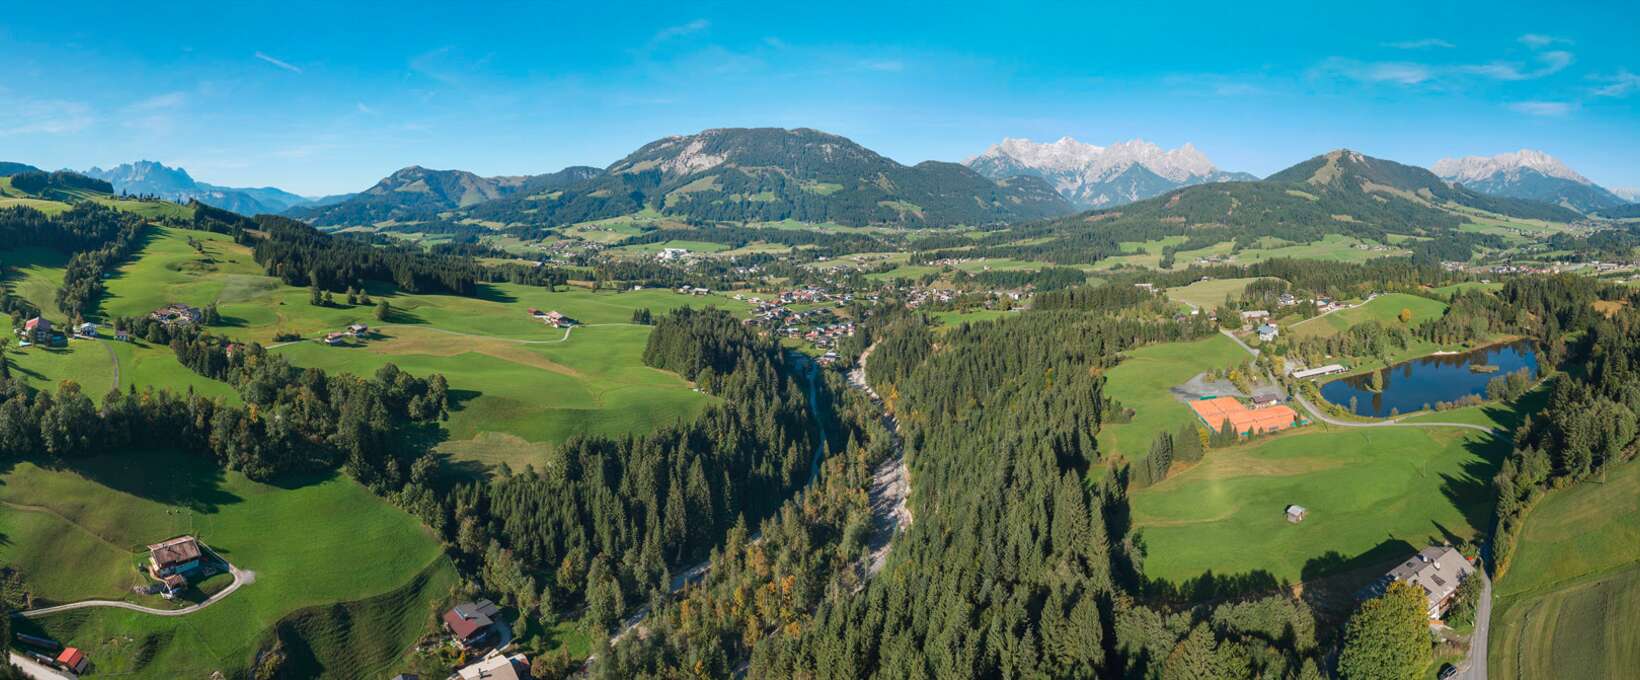 Panorama Pillerseetal in summer | Fieberbrunn | © Kitzbüheler Alpen Marketing GmbH | Simon Oberleitner